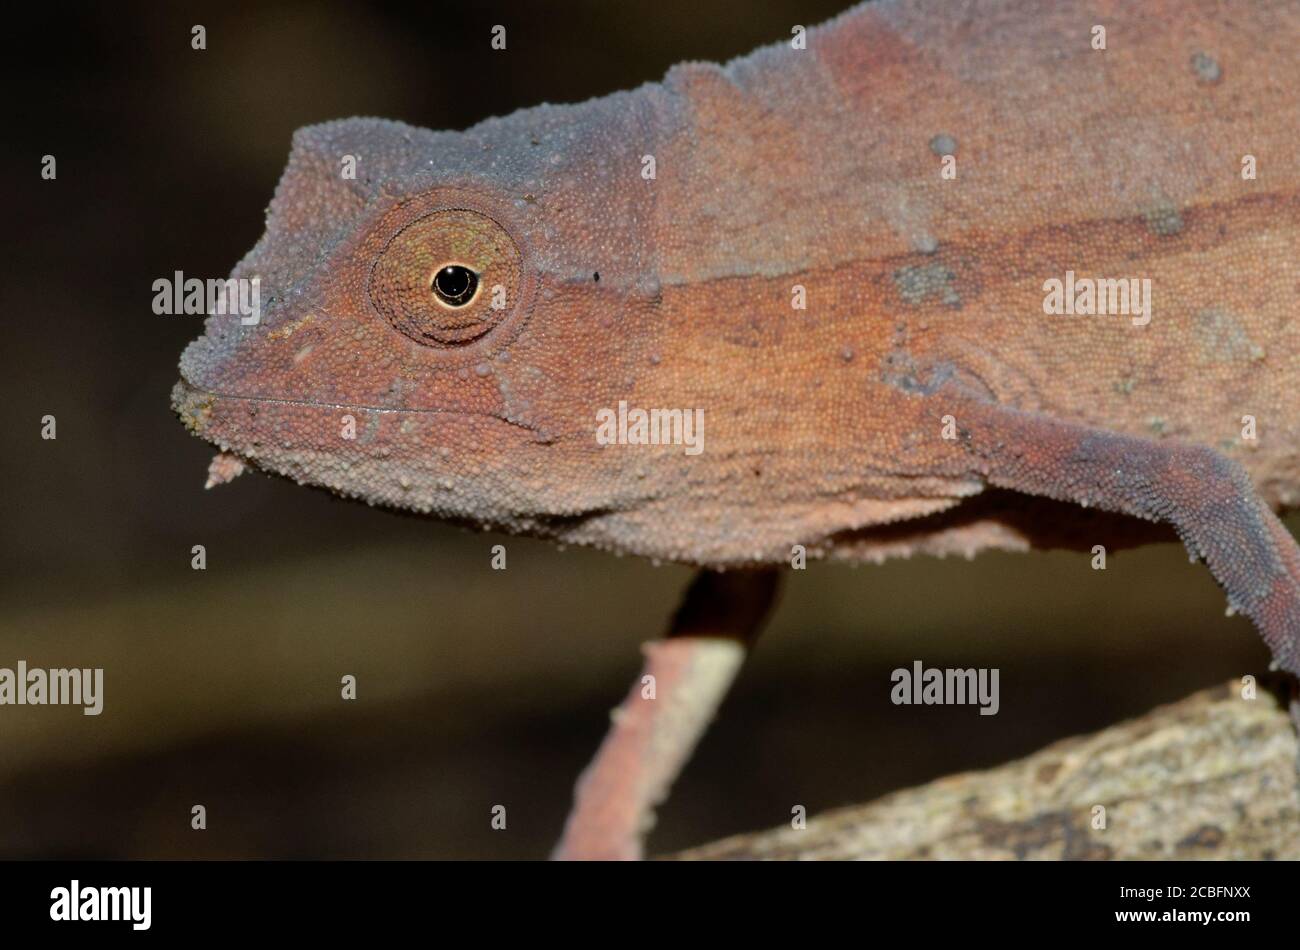 dwarf chameleon Stock Photo